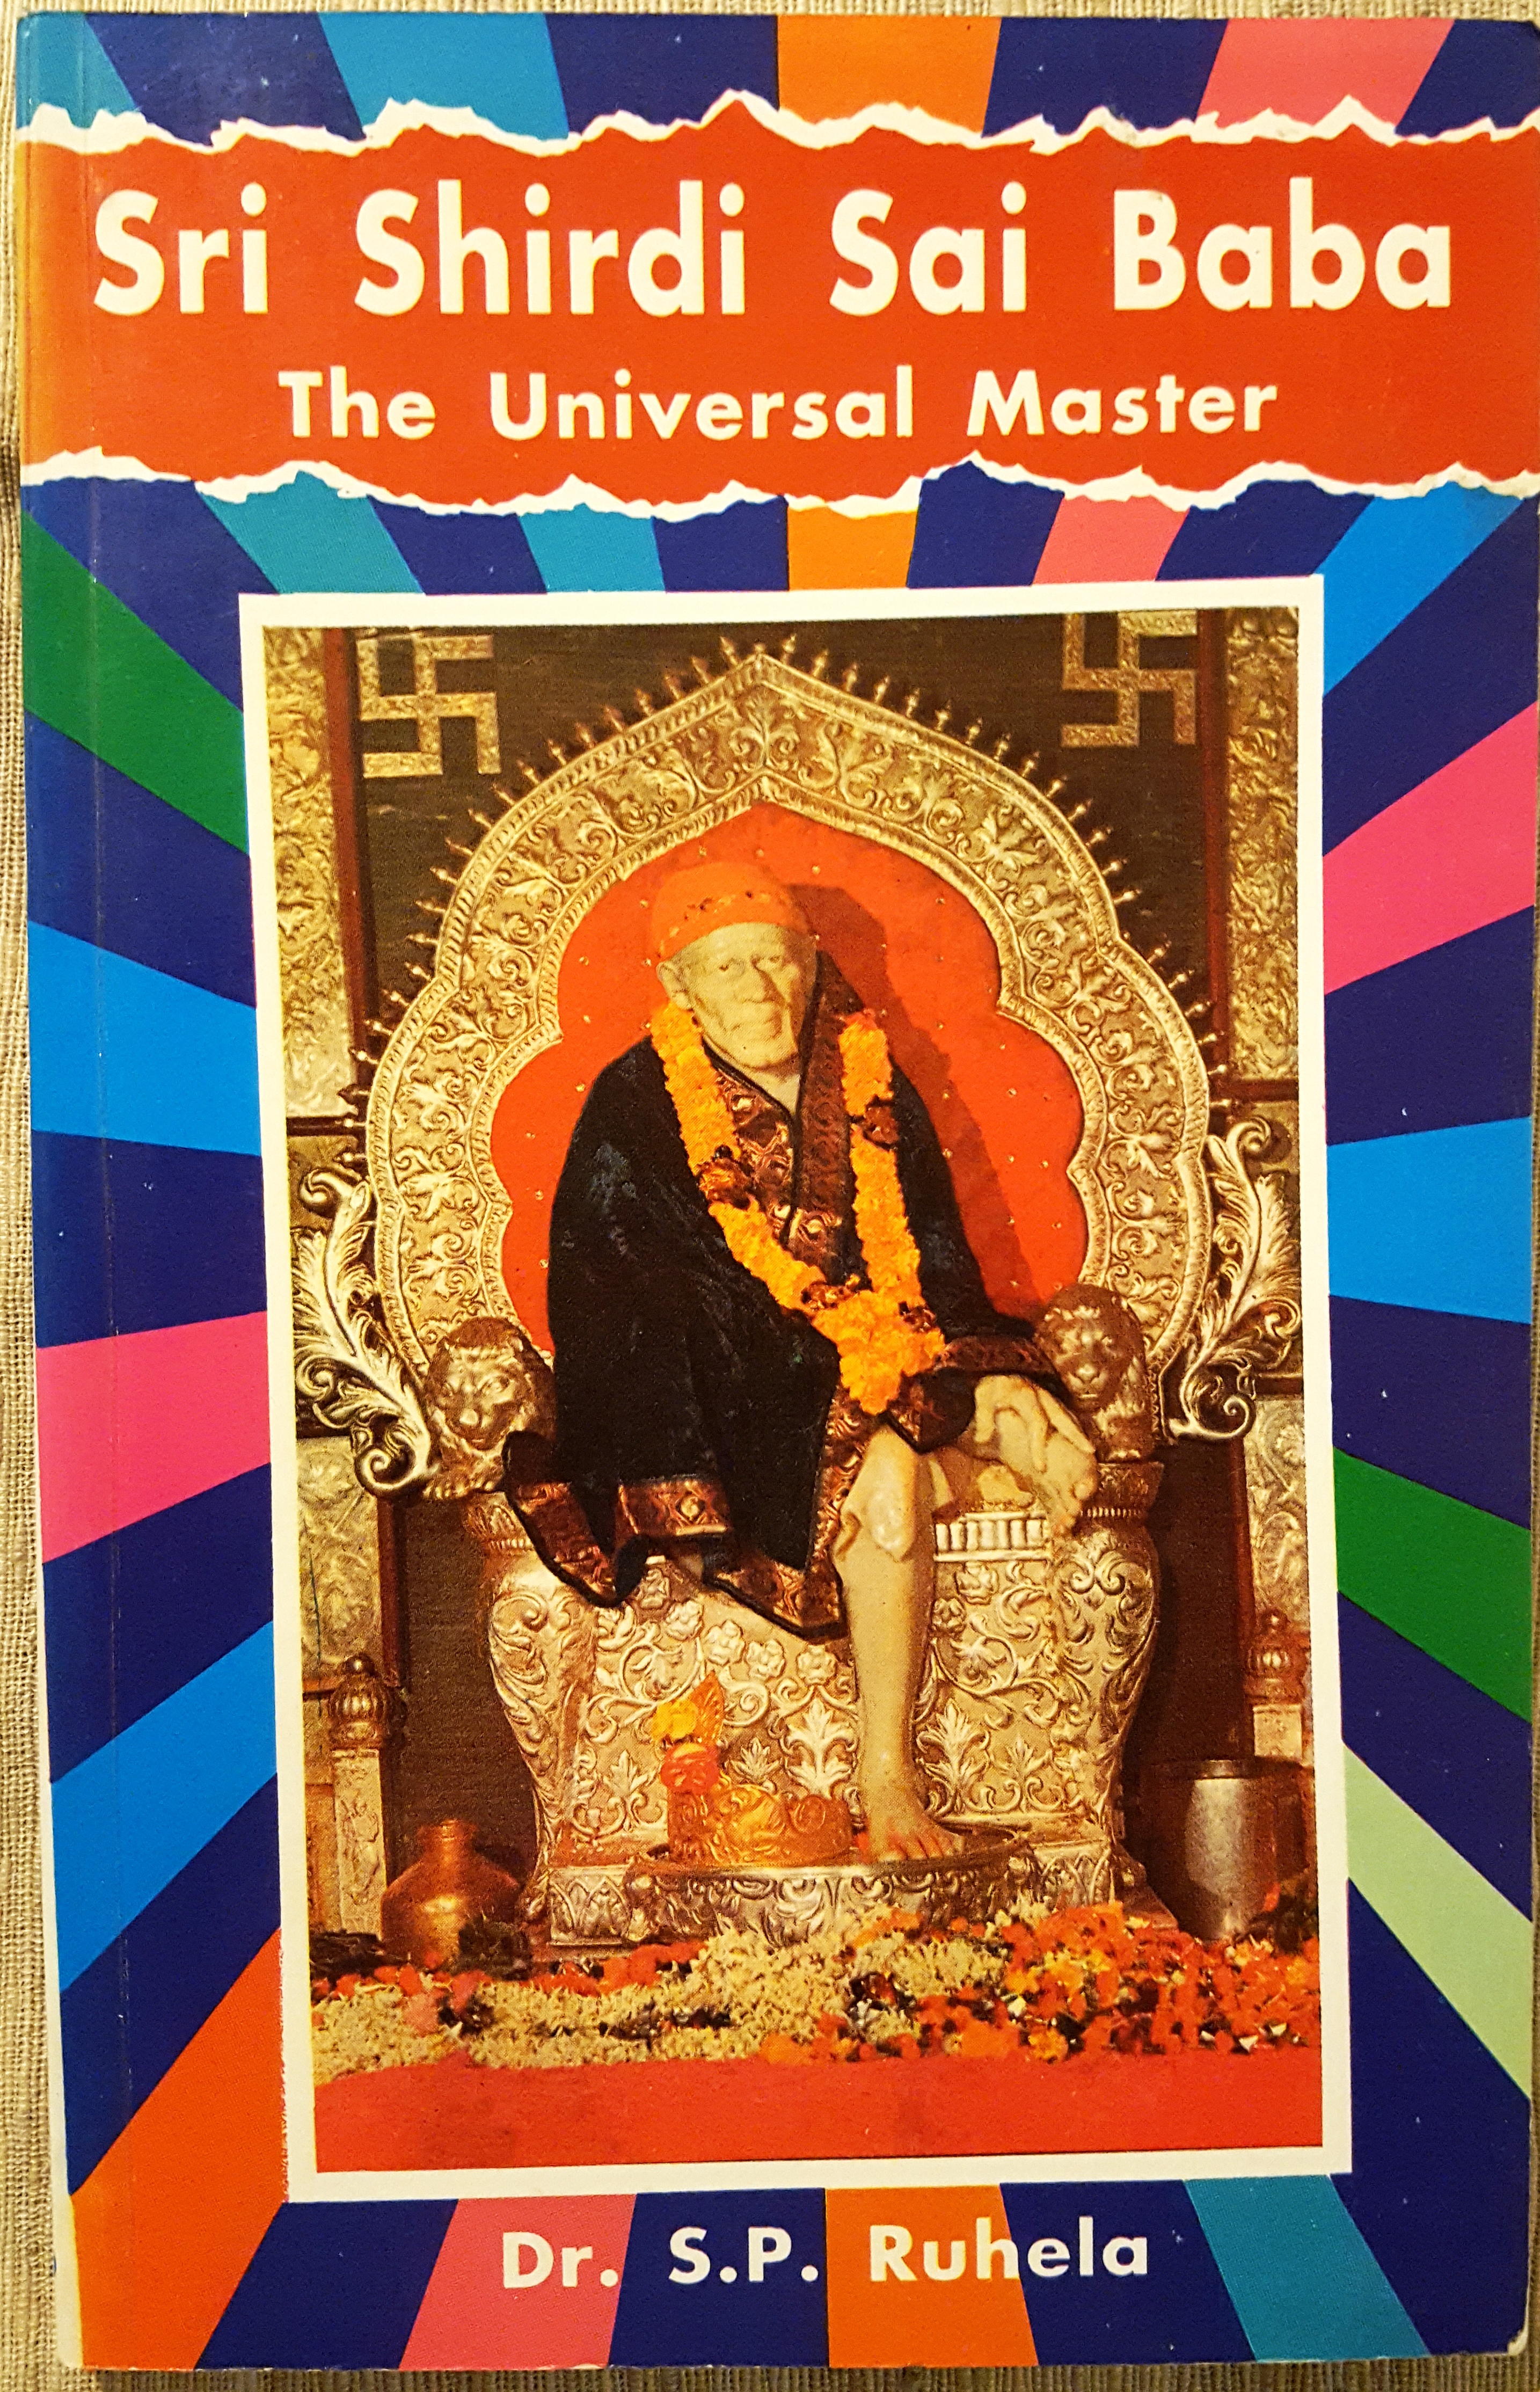 Shirdi Sai Baba Temple Frankfurt Germany (Deutschland) recommended book - Shri Shirdi Sai Baba - The universal master .